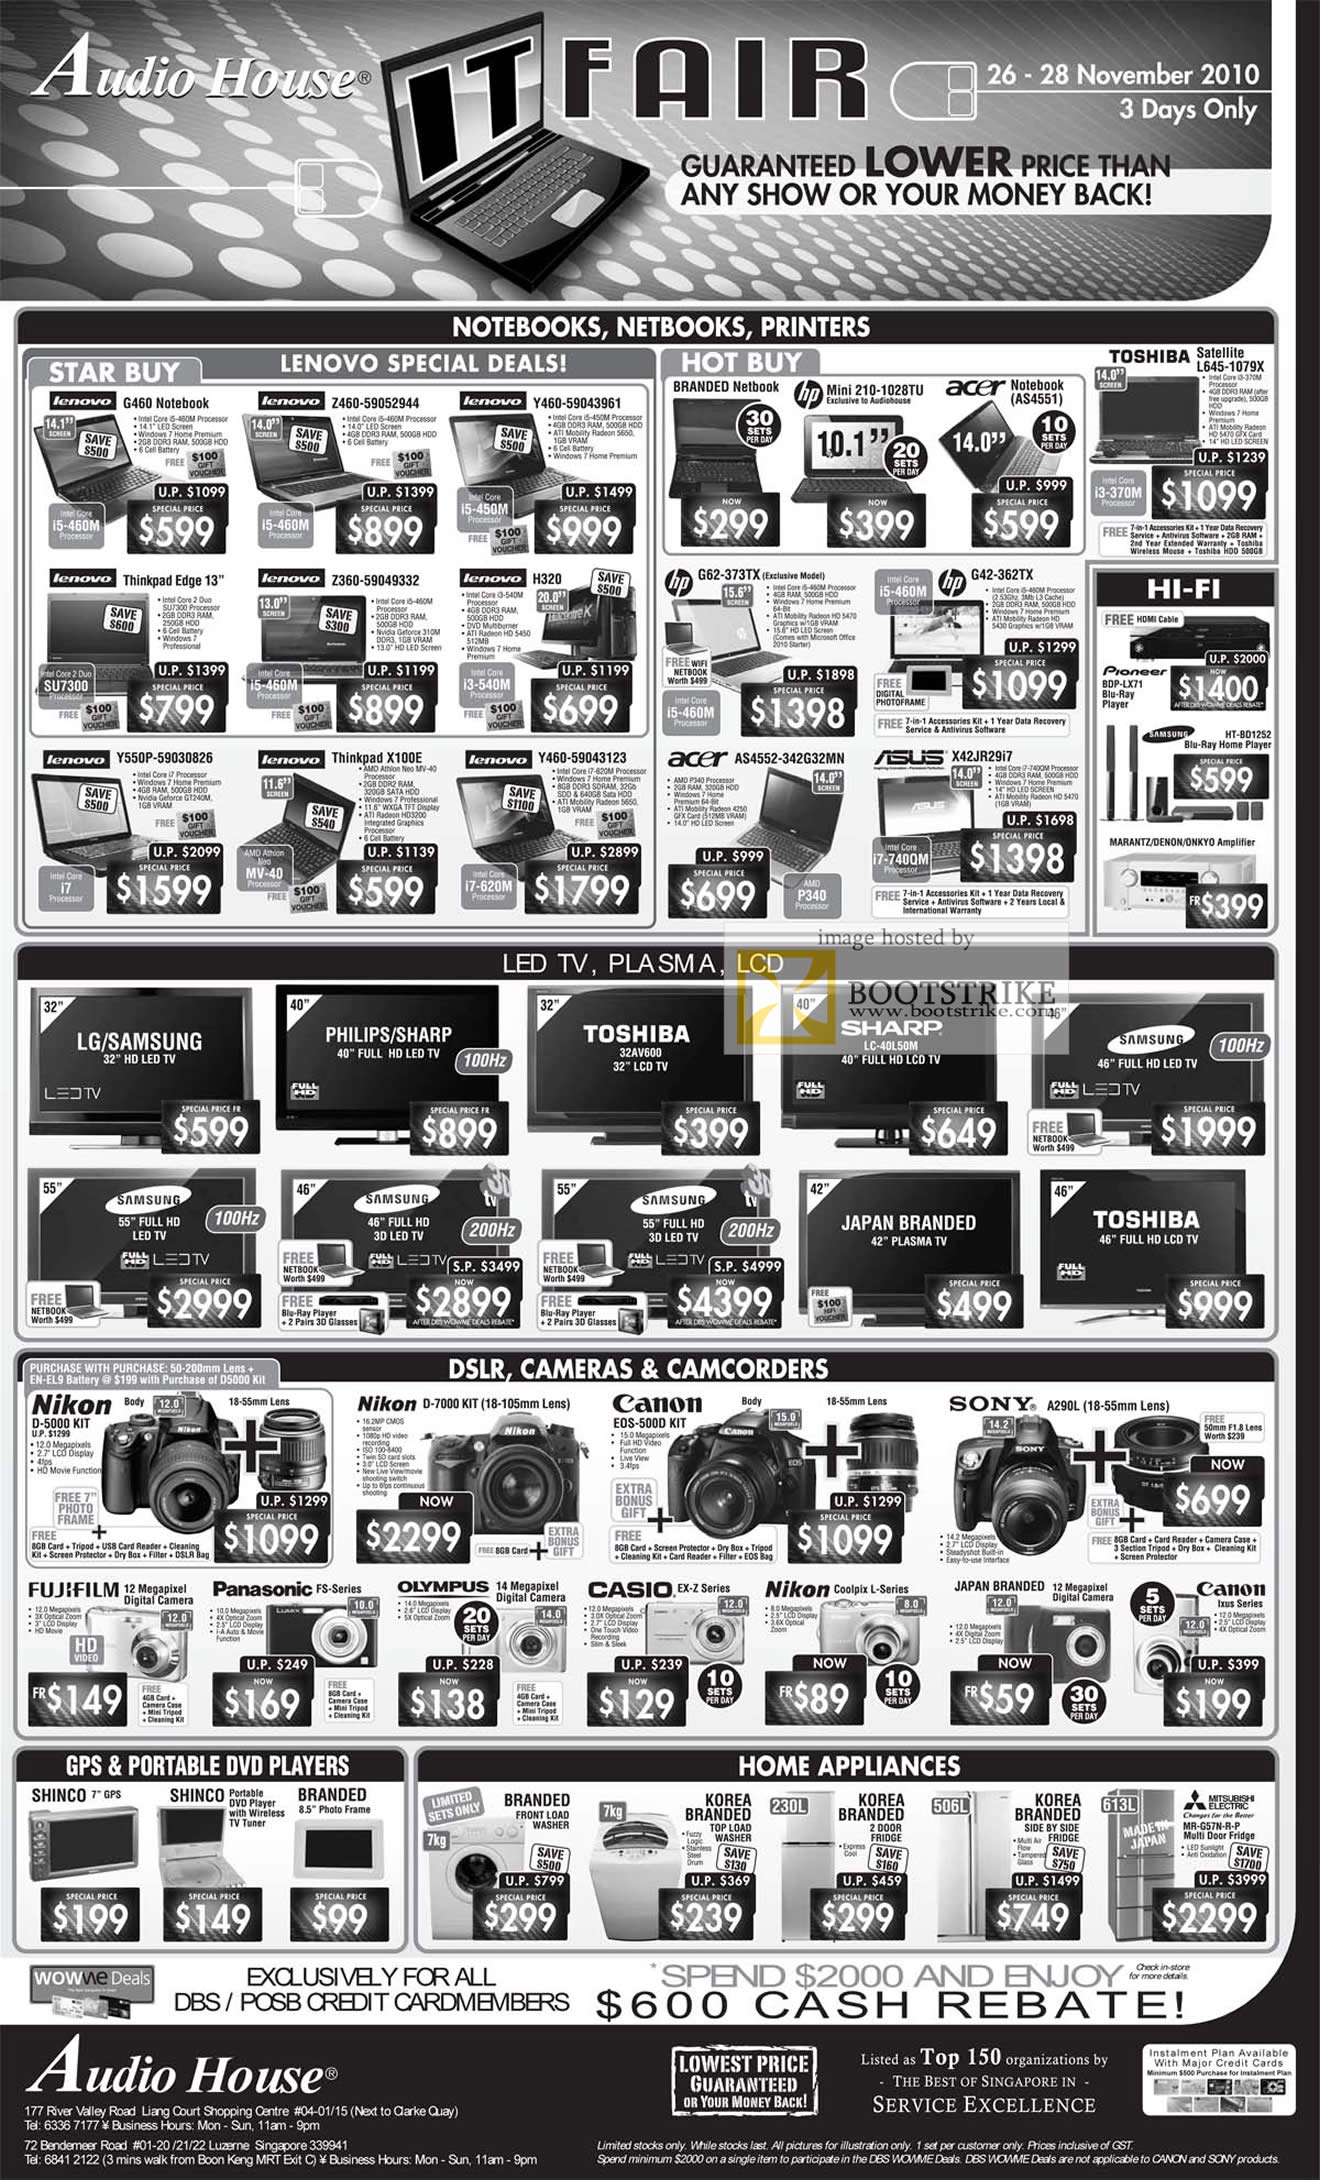 Sitex 2010 price list image brochure of Audio House Notebooks Lenovo G460 Y460 Thinkpad Edge HP G62 LED TV LCD Plasma Samsung LG DSLR Nikon Canon GPS